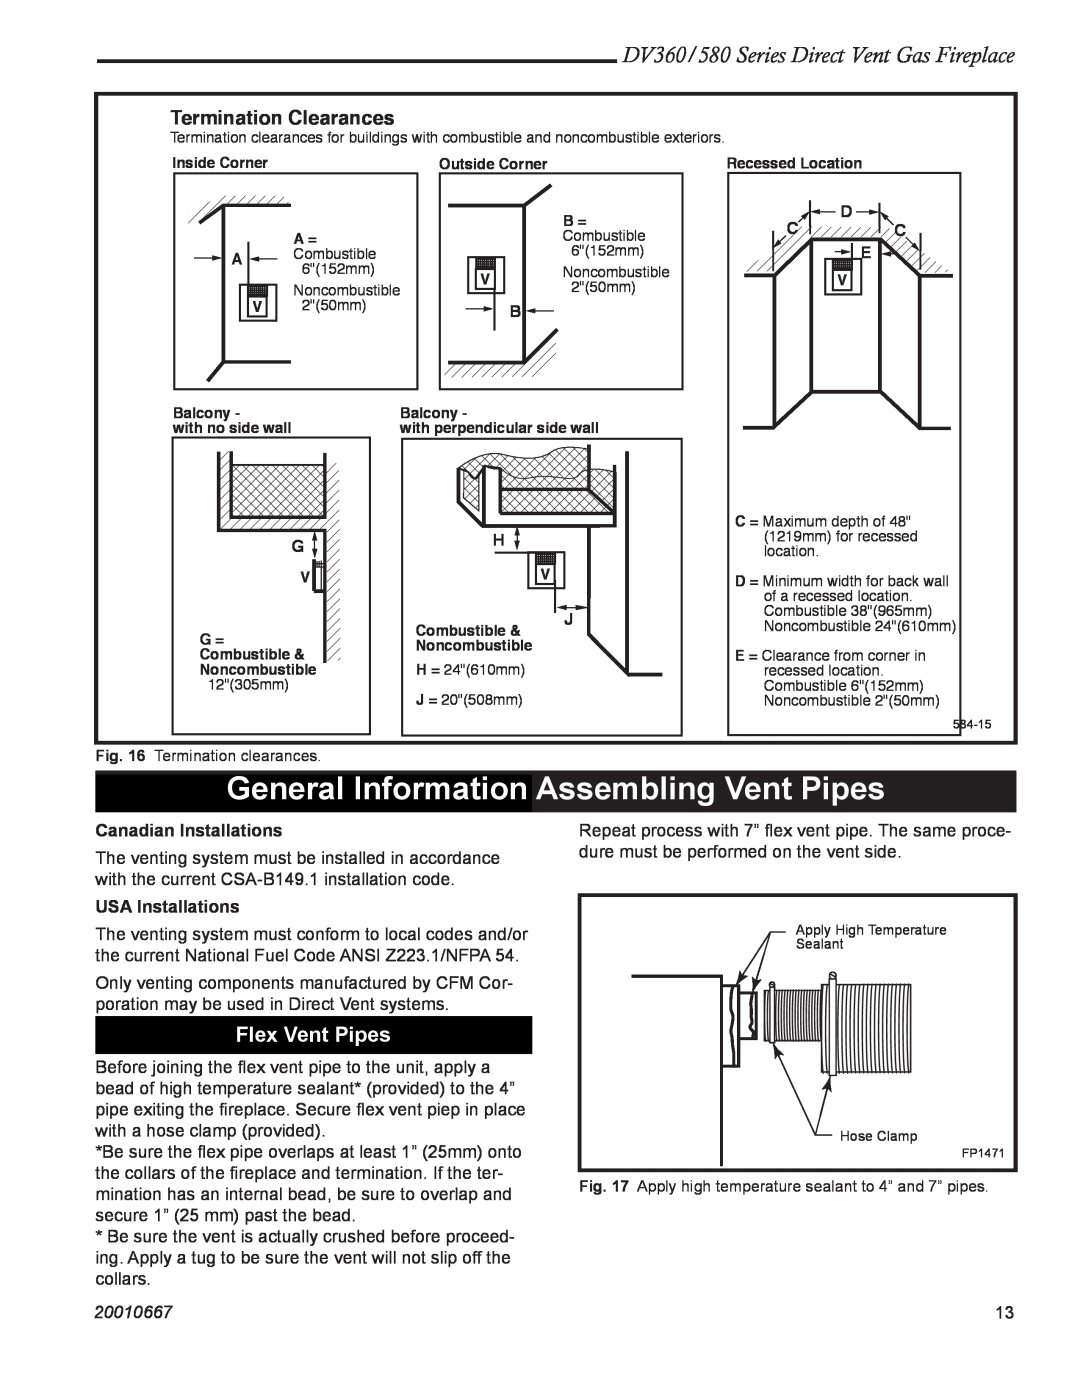 Vermont Casting DV580 General Information Assembling Vent Pipes, Flex Vent Pipes, Termination Clearances, D Cc E, 20010667 